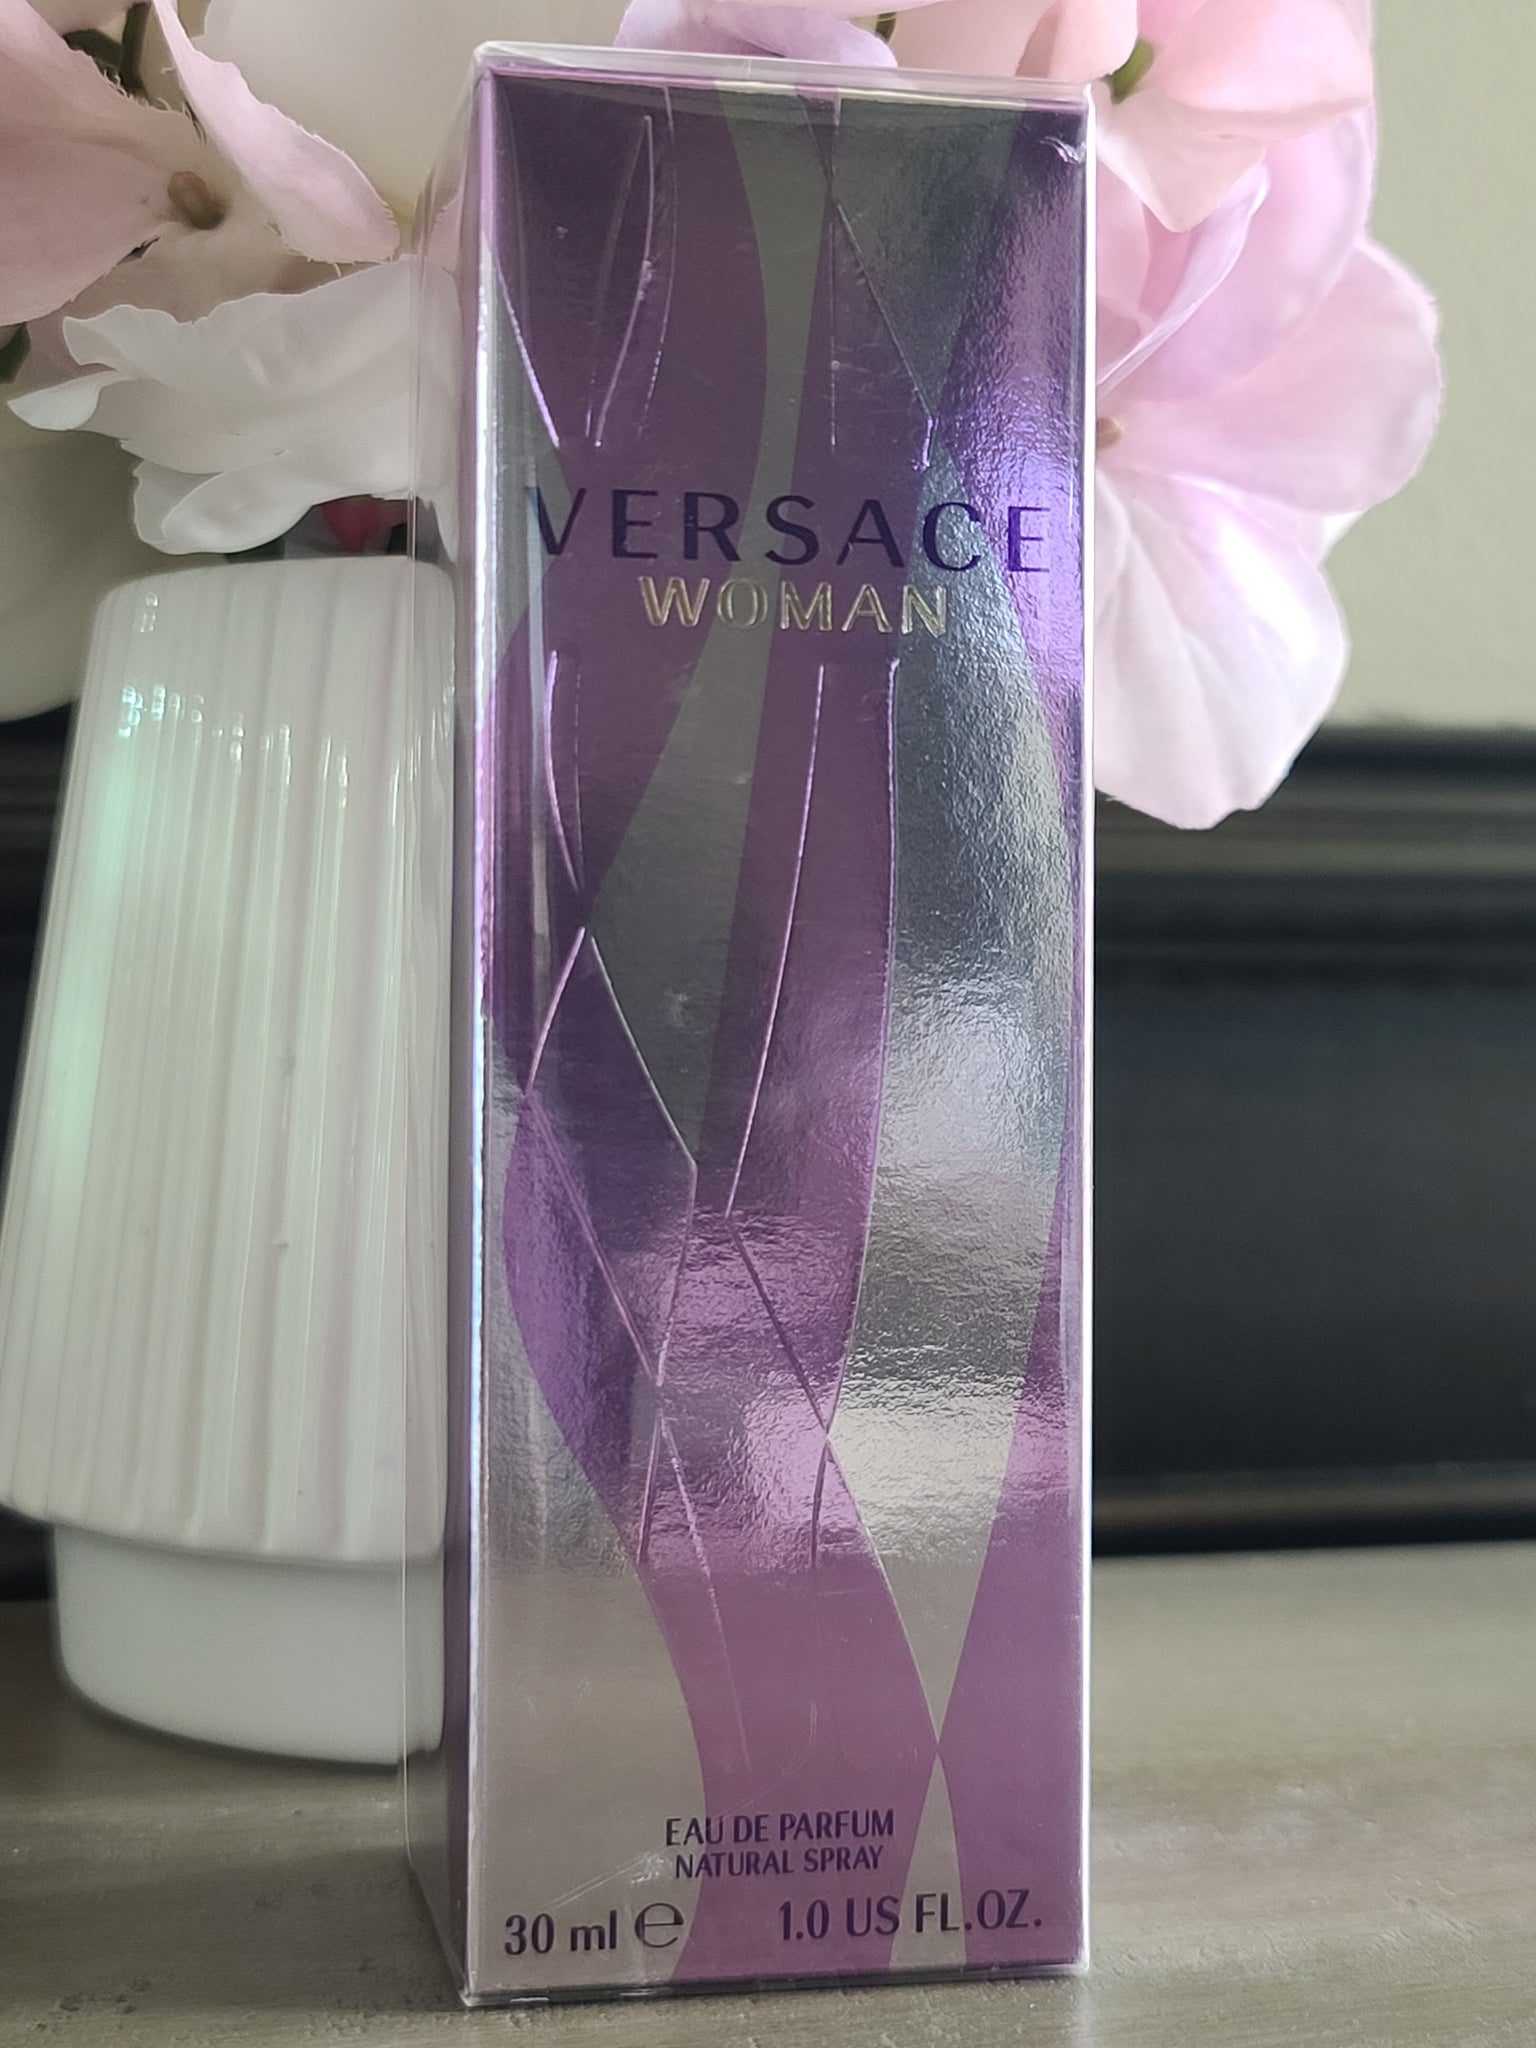 Versace Woman Eau de Parfum Natural Spray – Skintastic